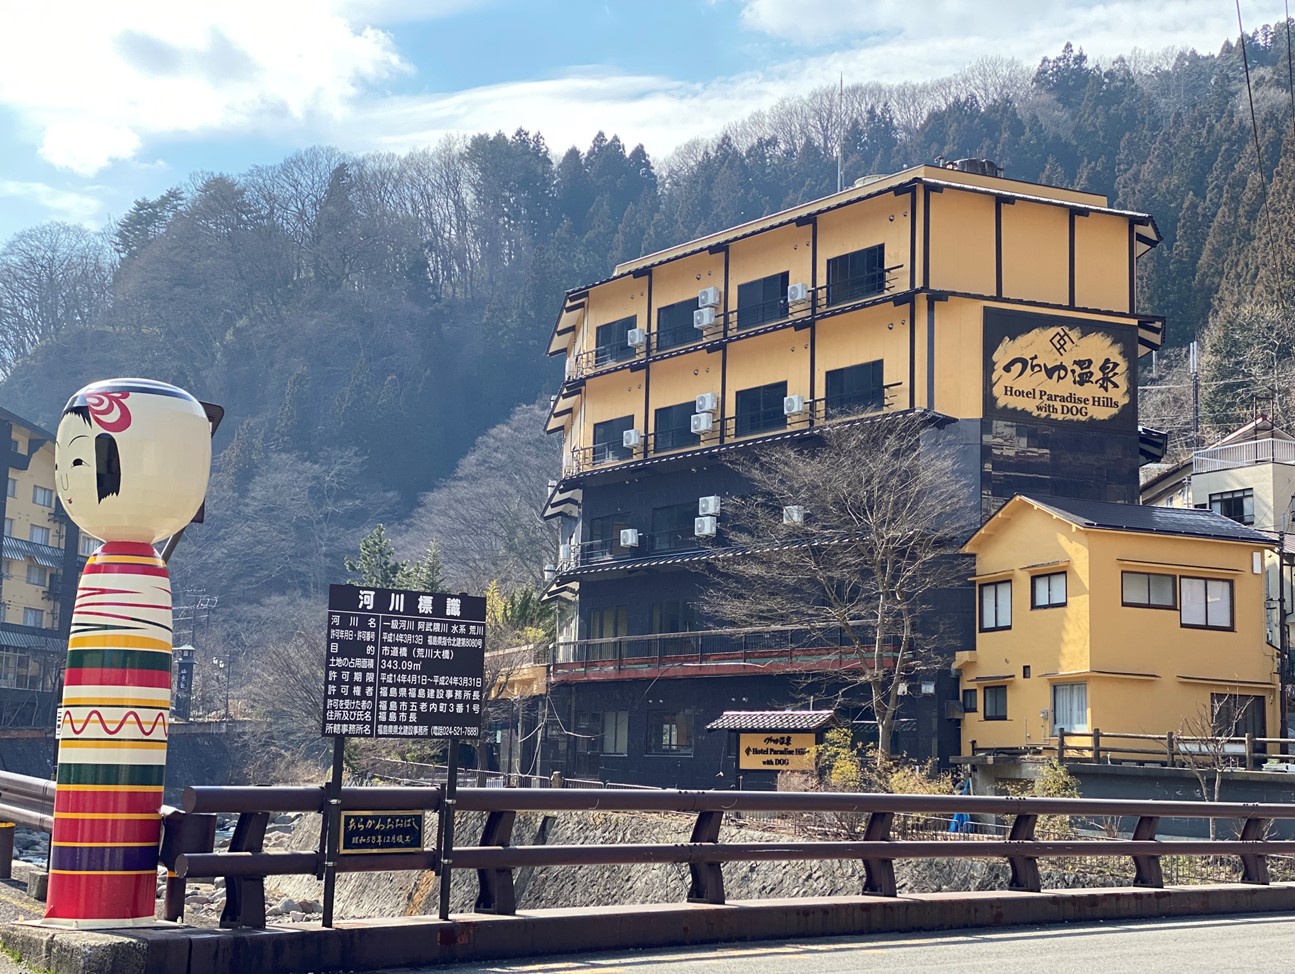 Tsuchiyu Onsen Hotel Paradise Hills With Dog